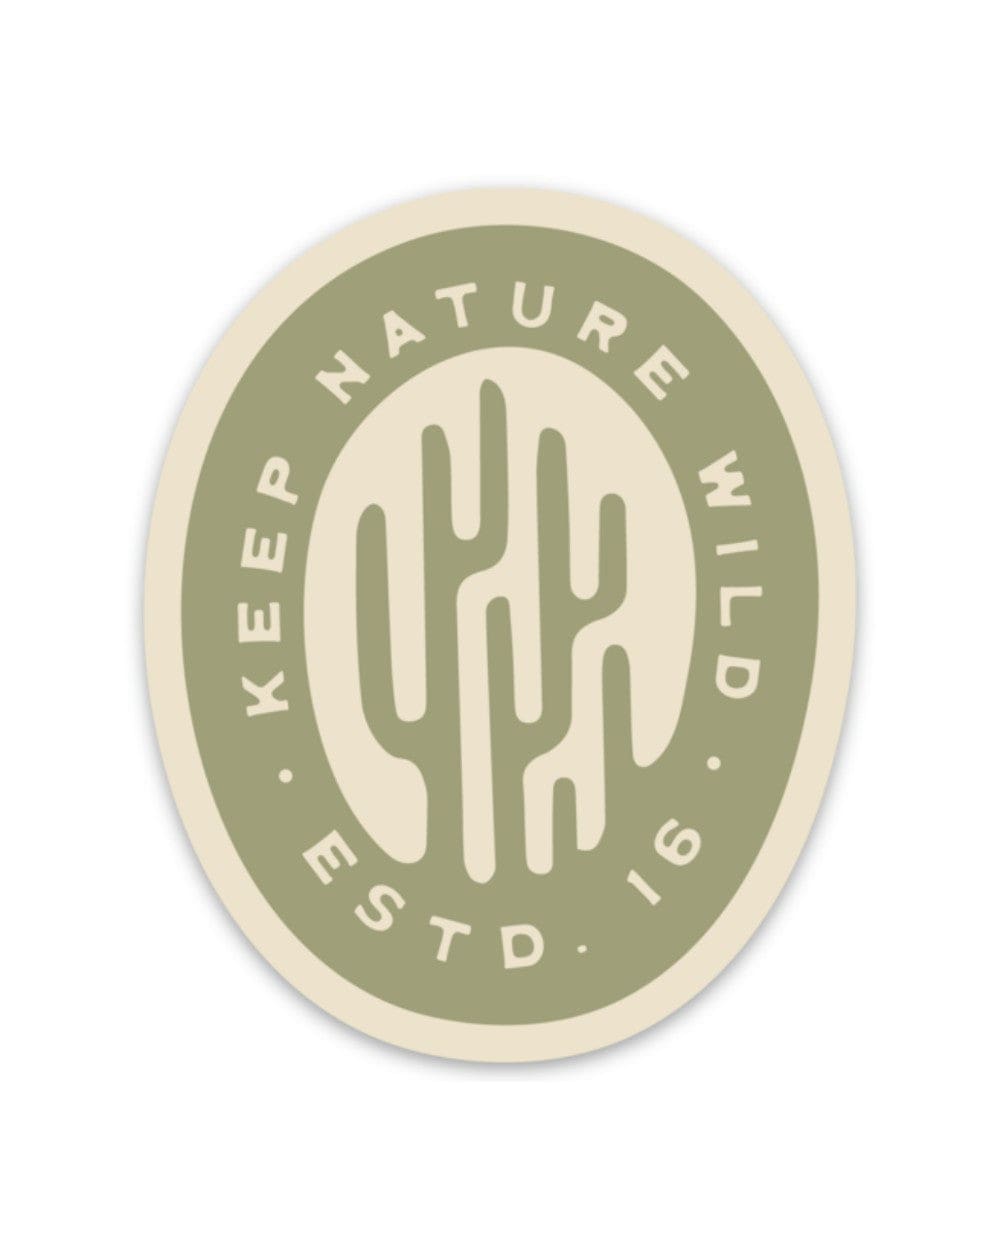 Keep Nature Wild Sticker Saguaro Badge | Sticker